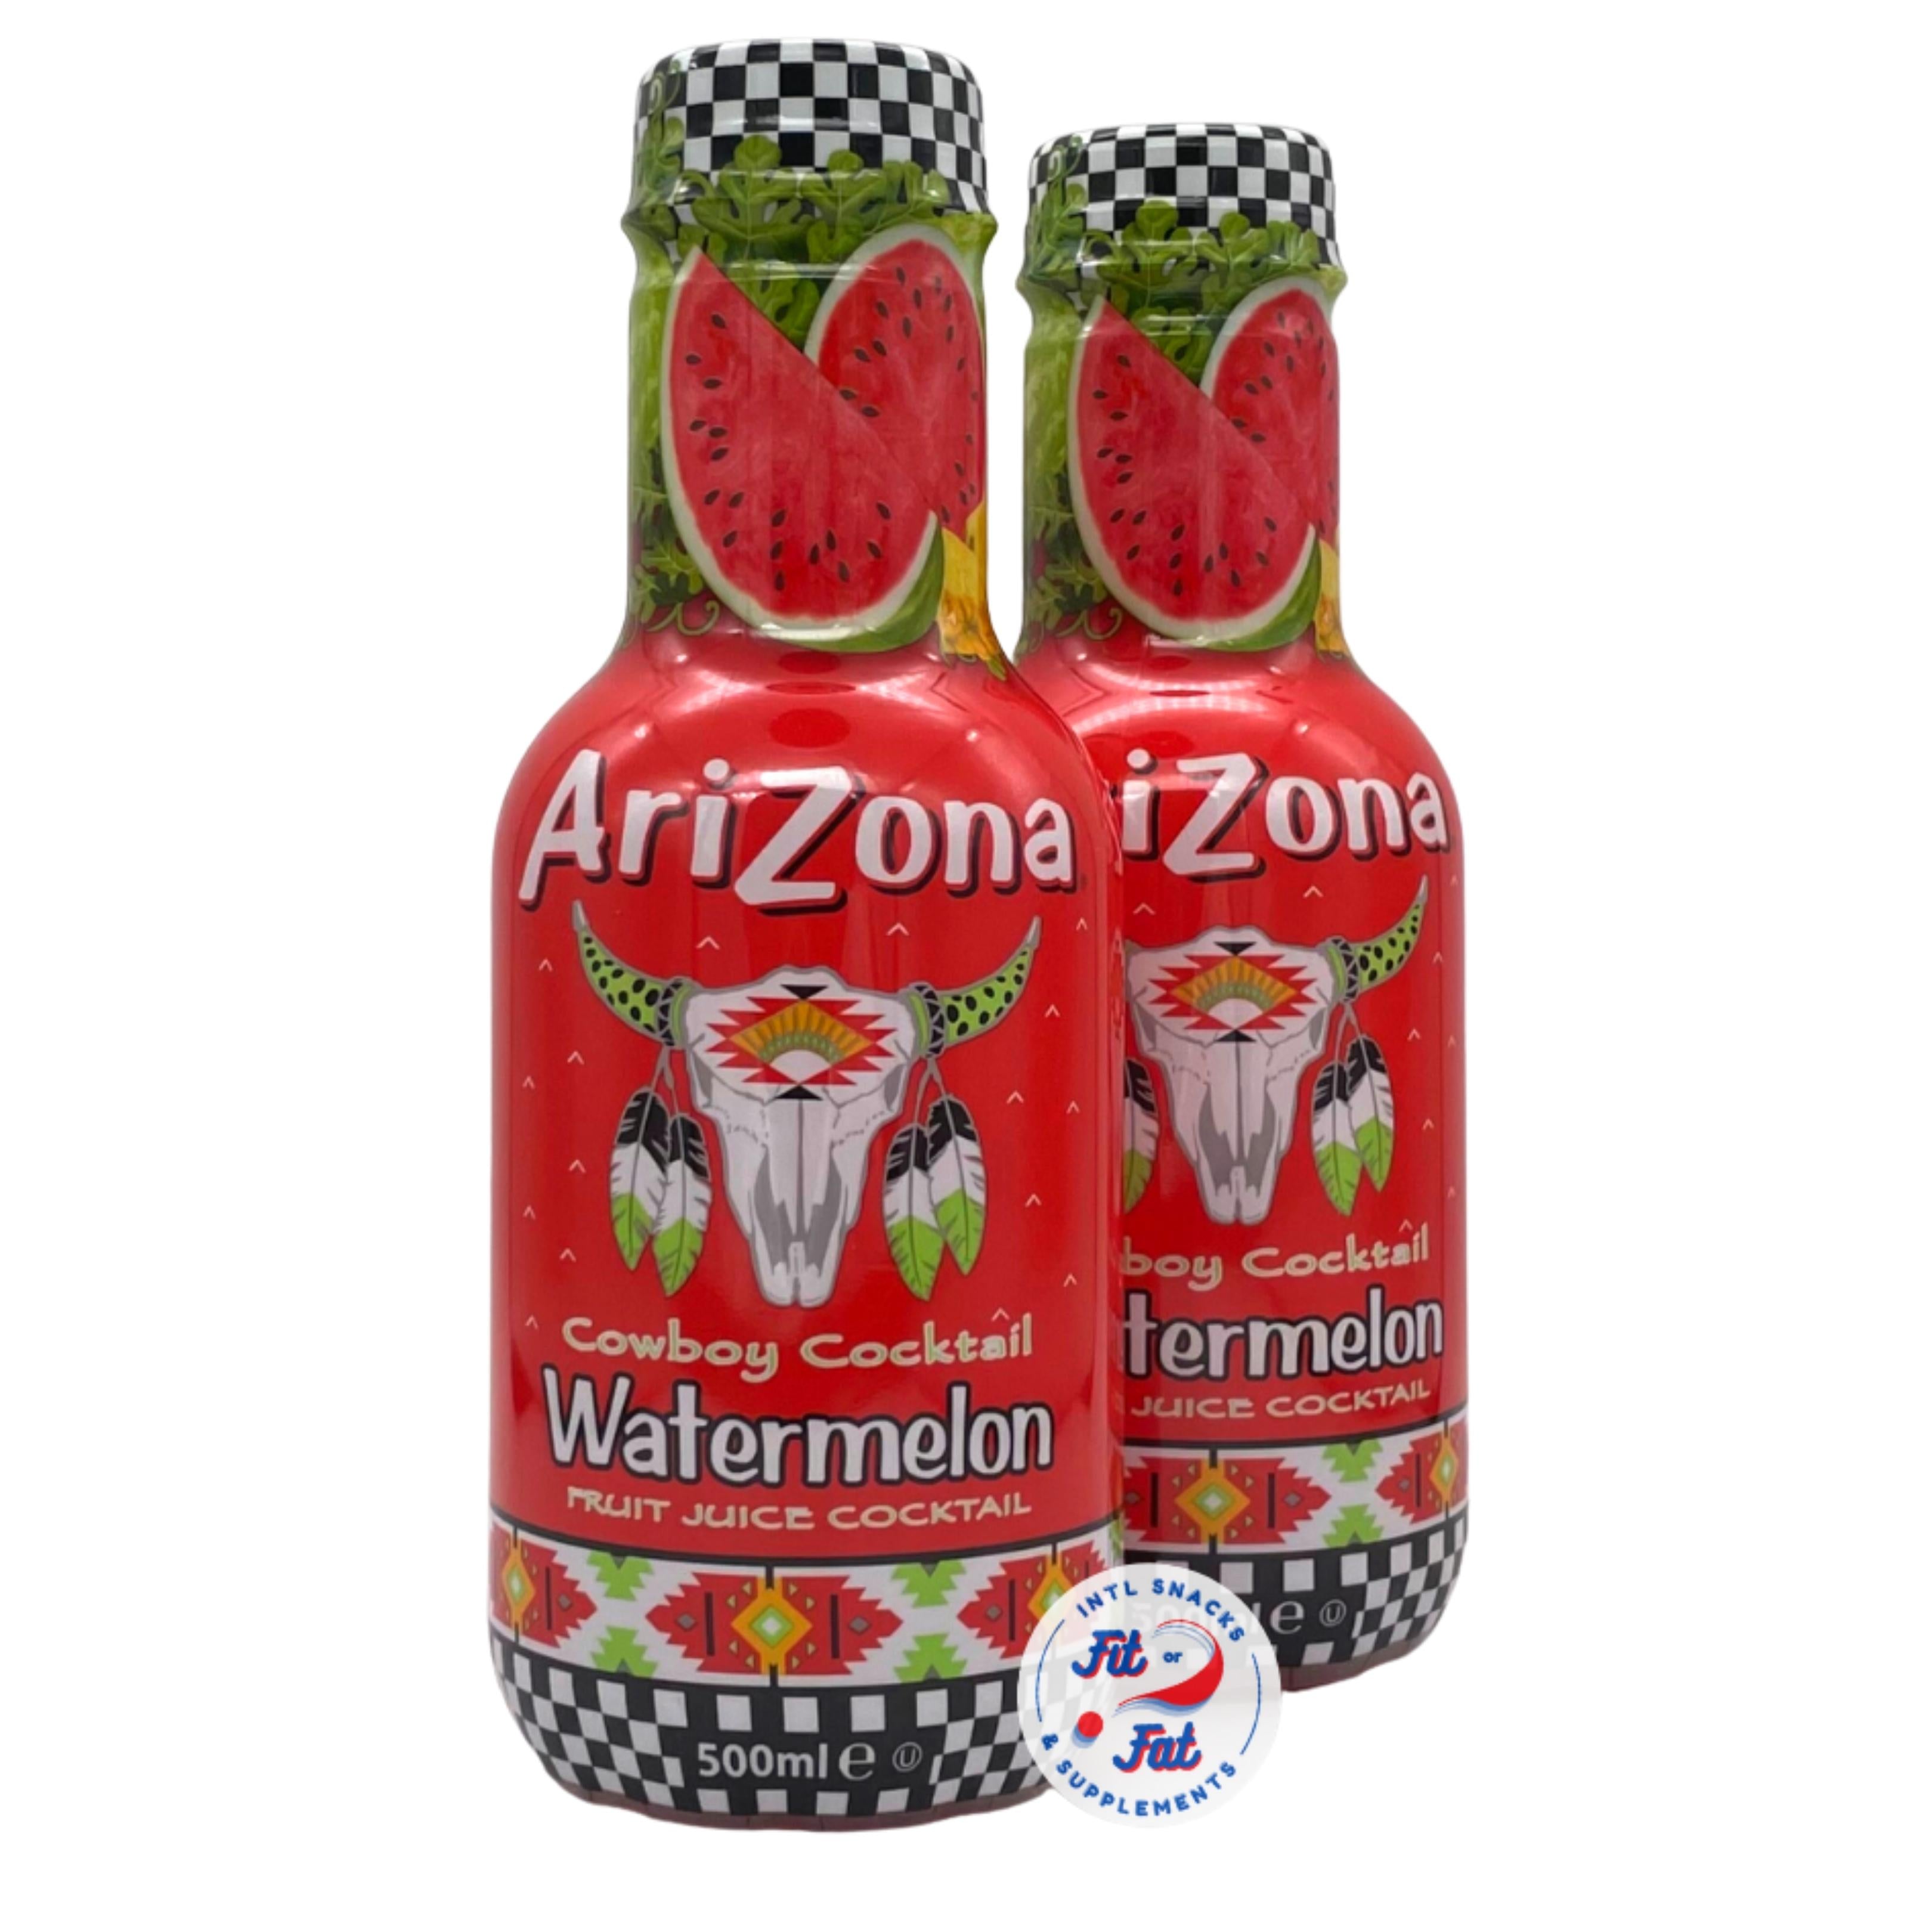 AriZona - Cowboy Cocktail  Watermelon 500 ml